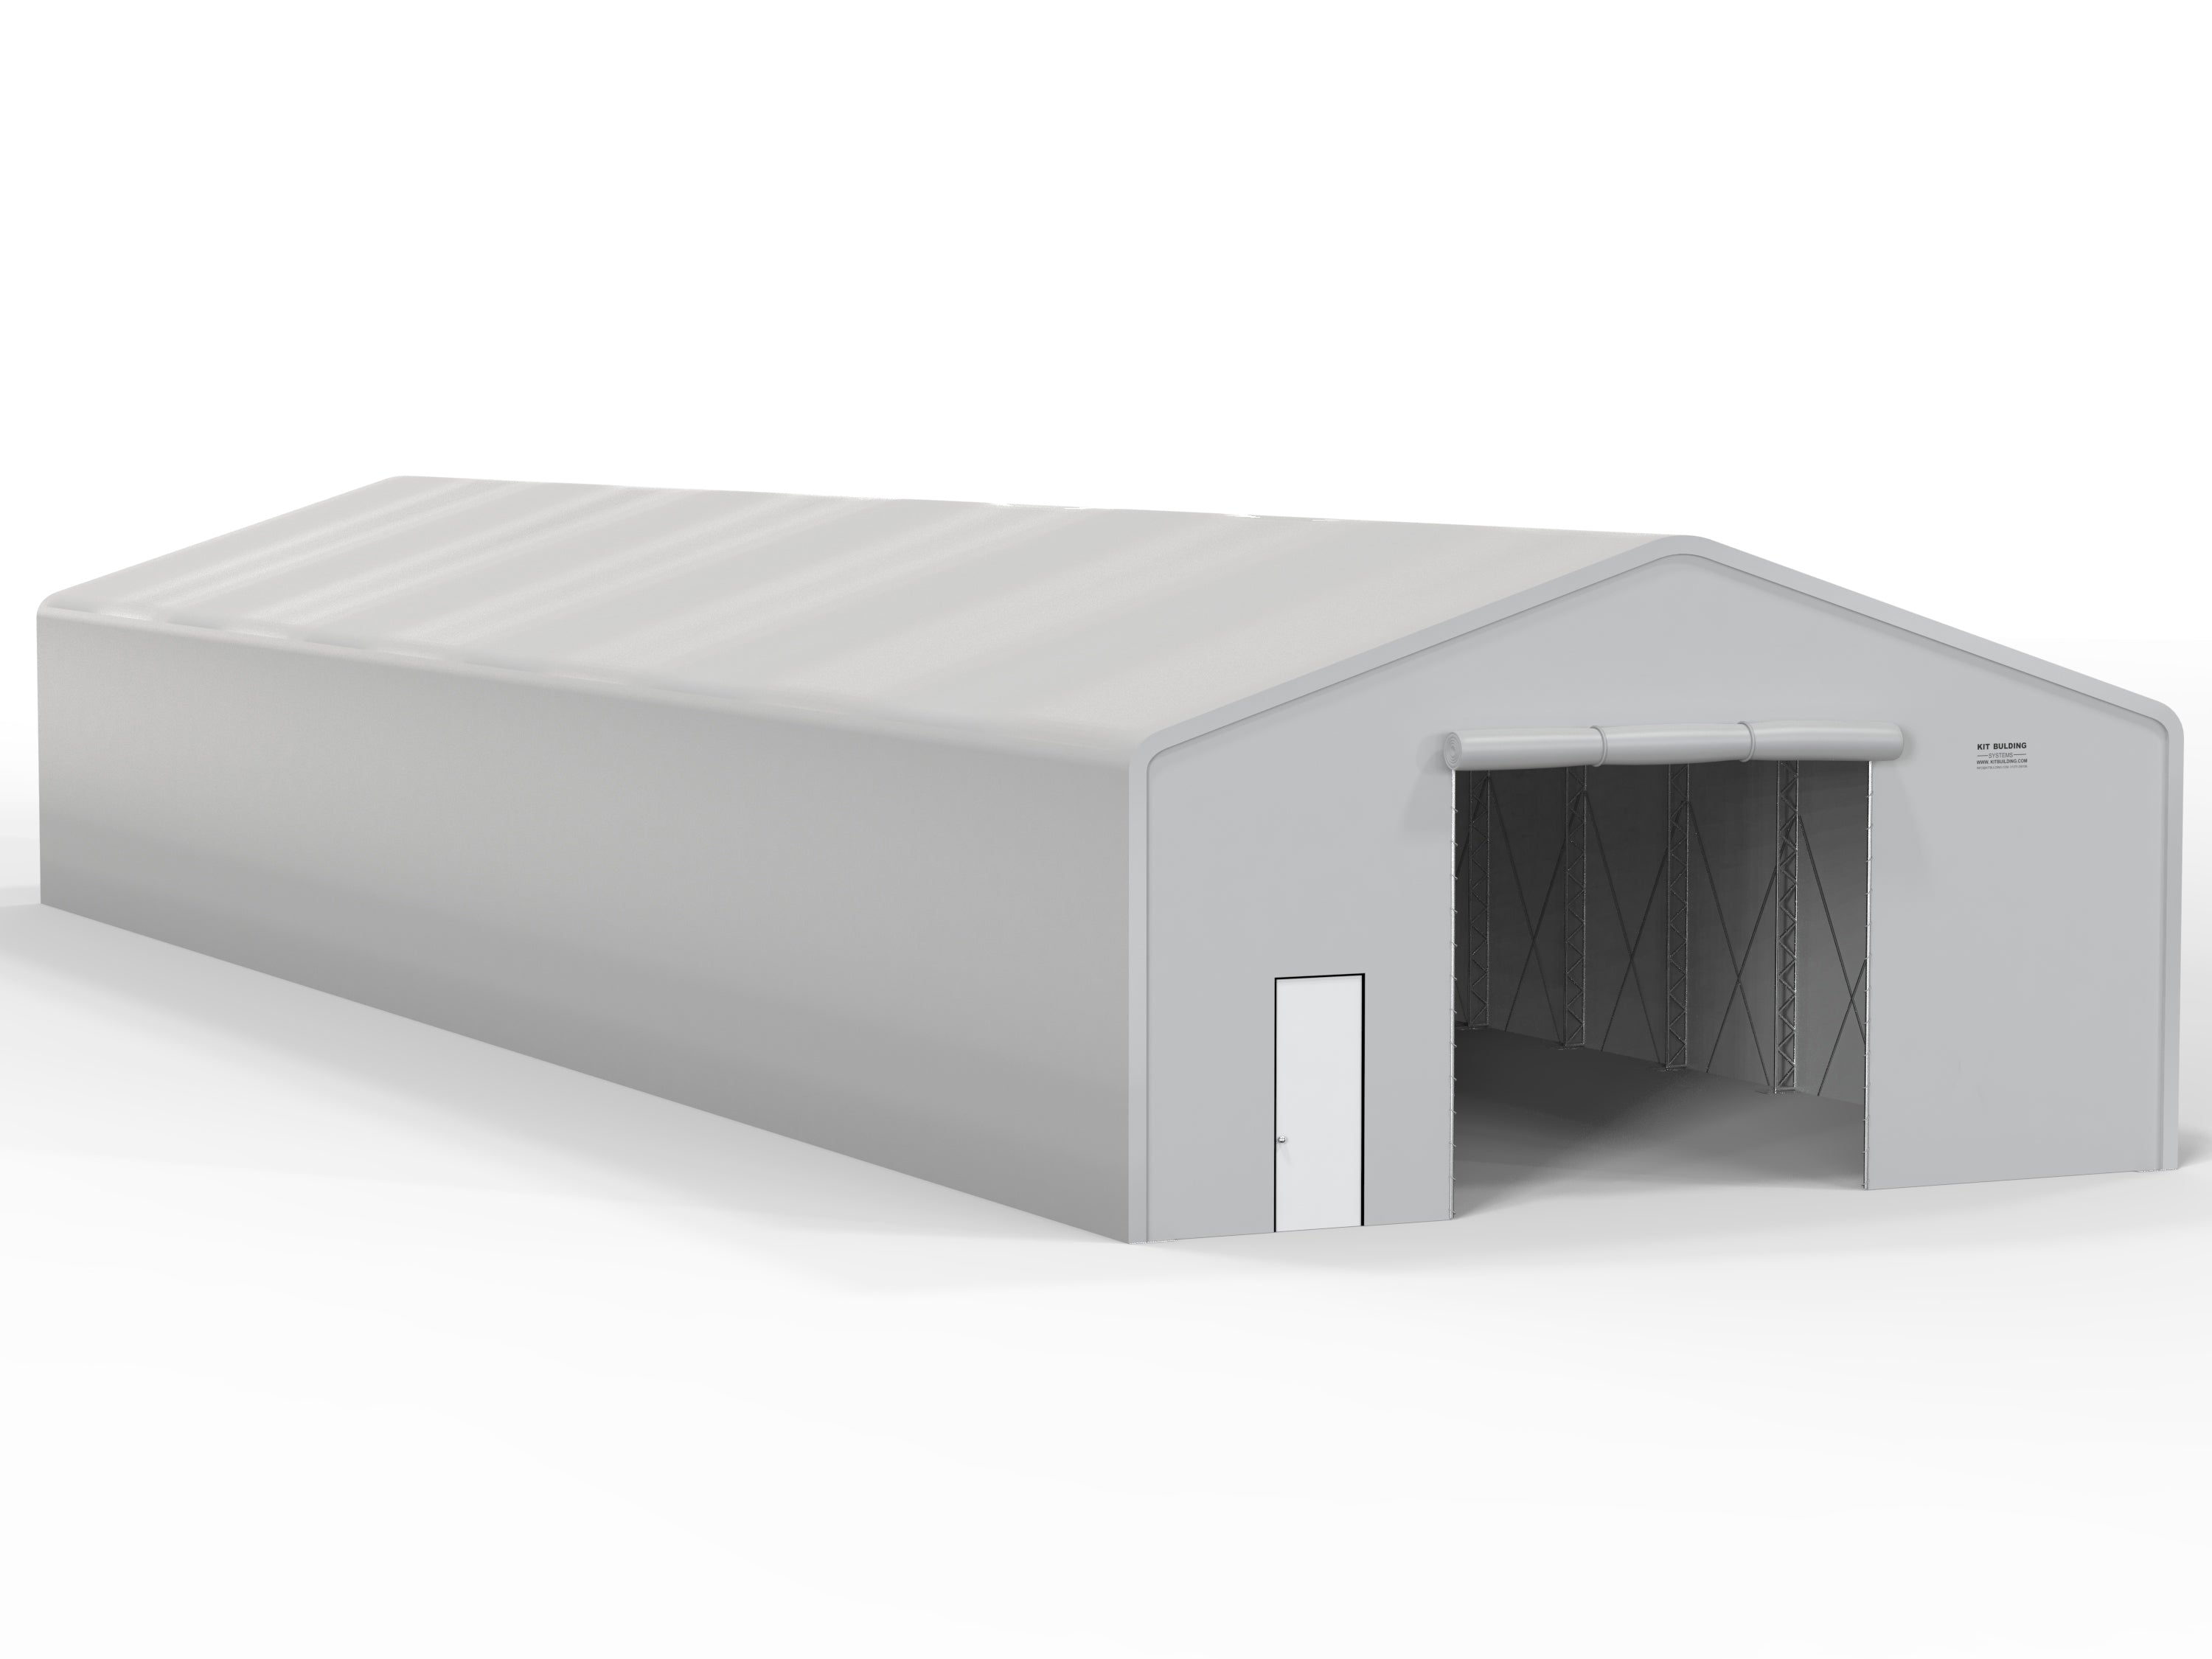 Double Truss PVC temporary storage building - Grey - Manual Roll up Door